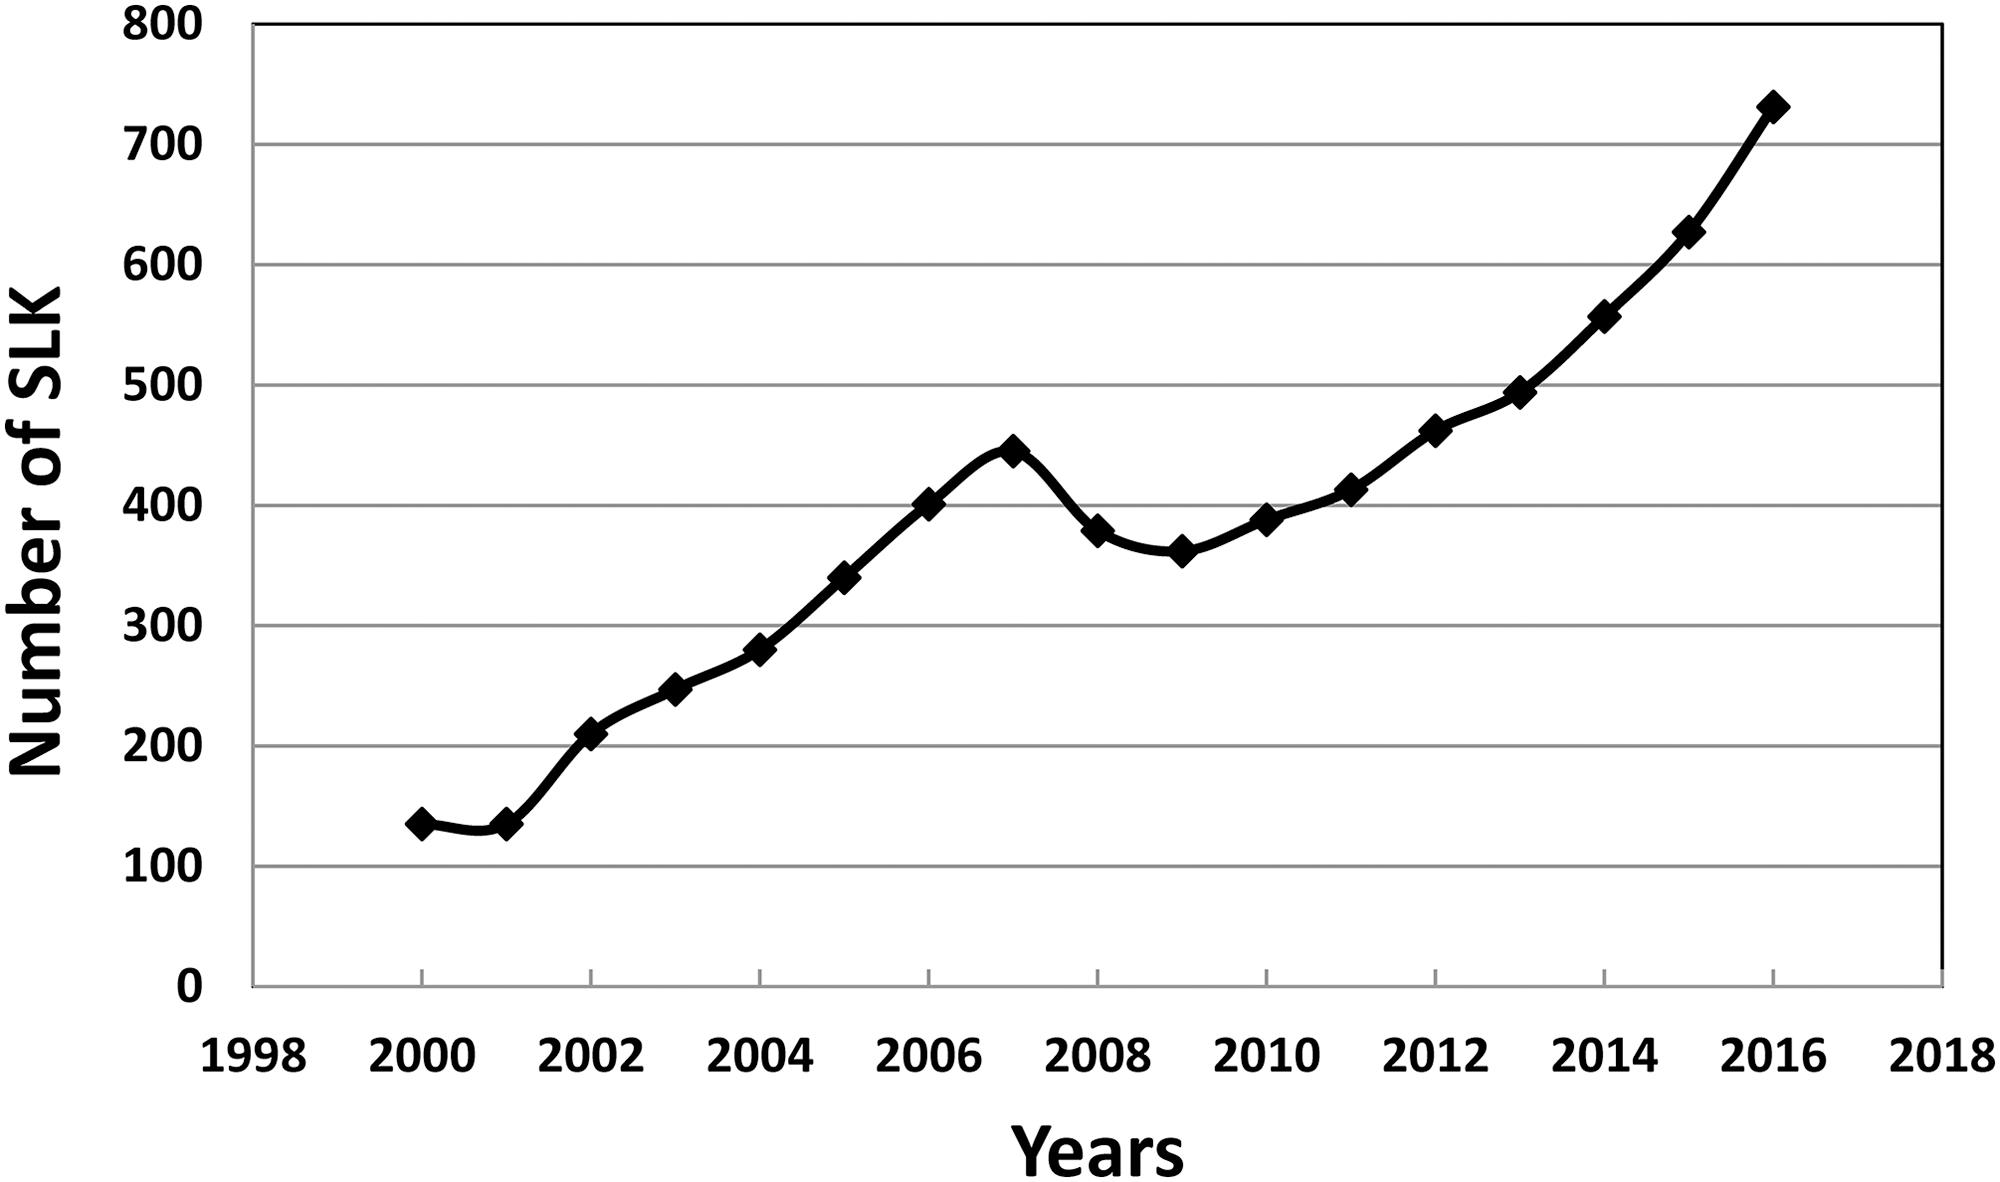 SLK transplantation by year in the USA.